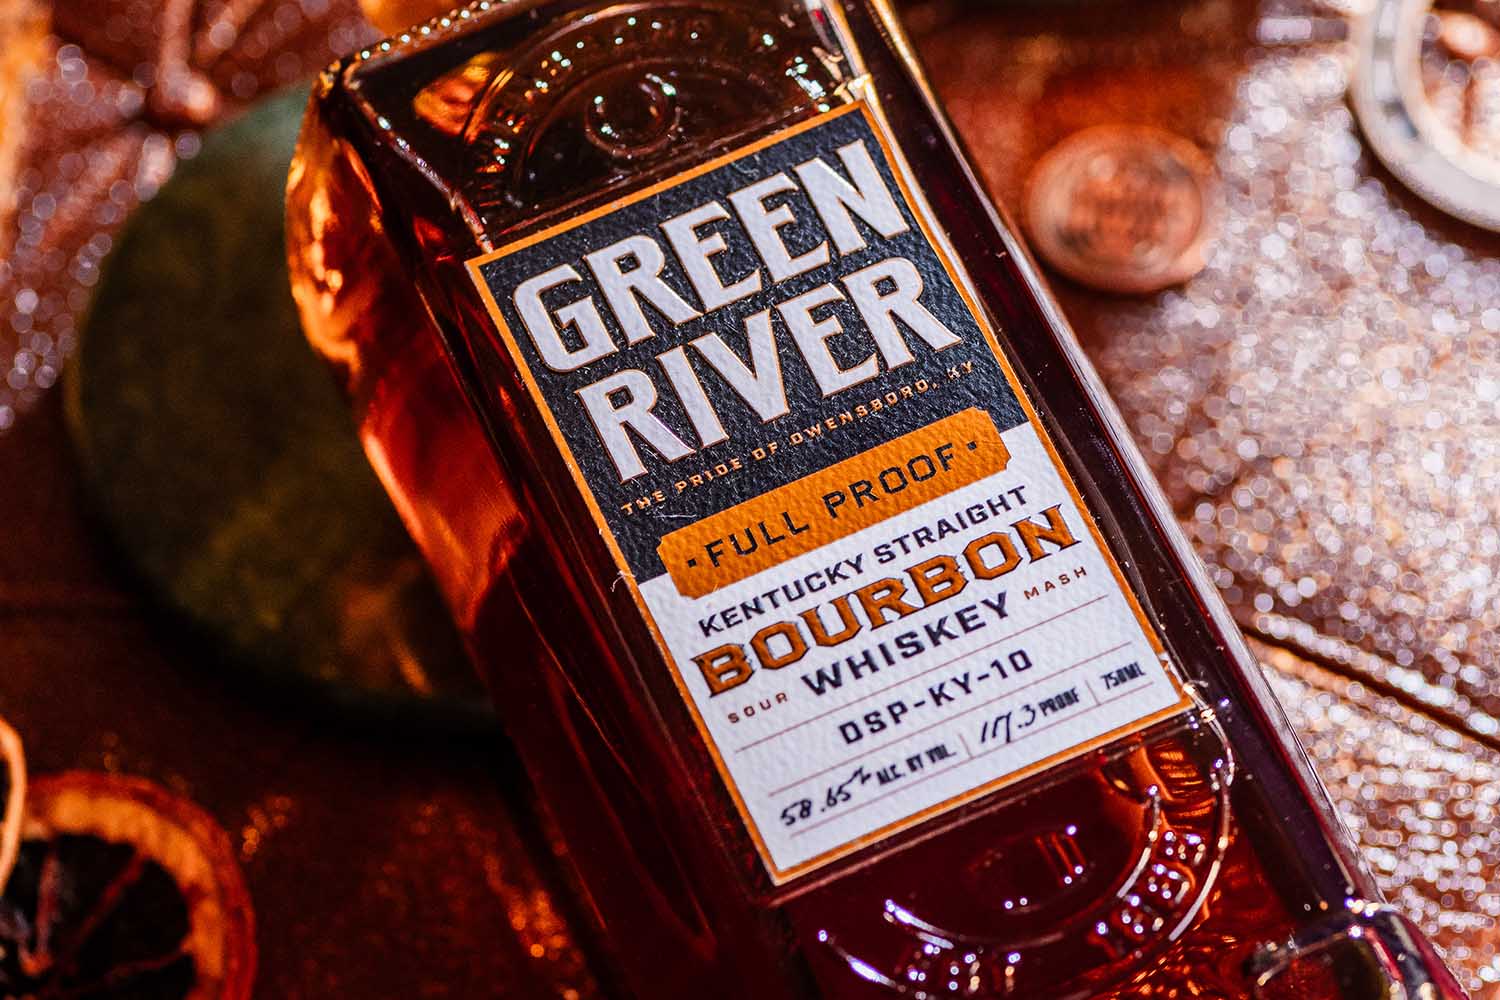 Green River Full Proof Kentucky Straight Bourbon